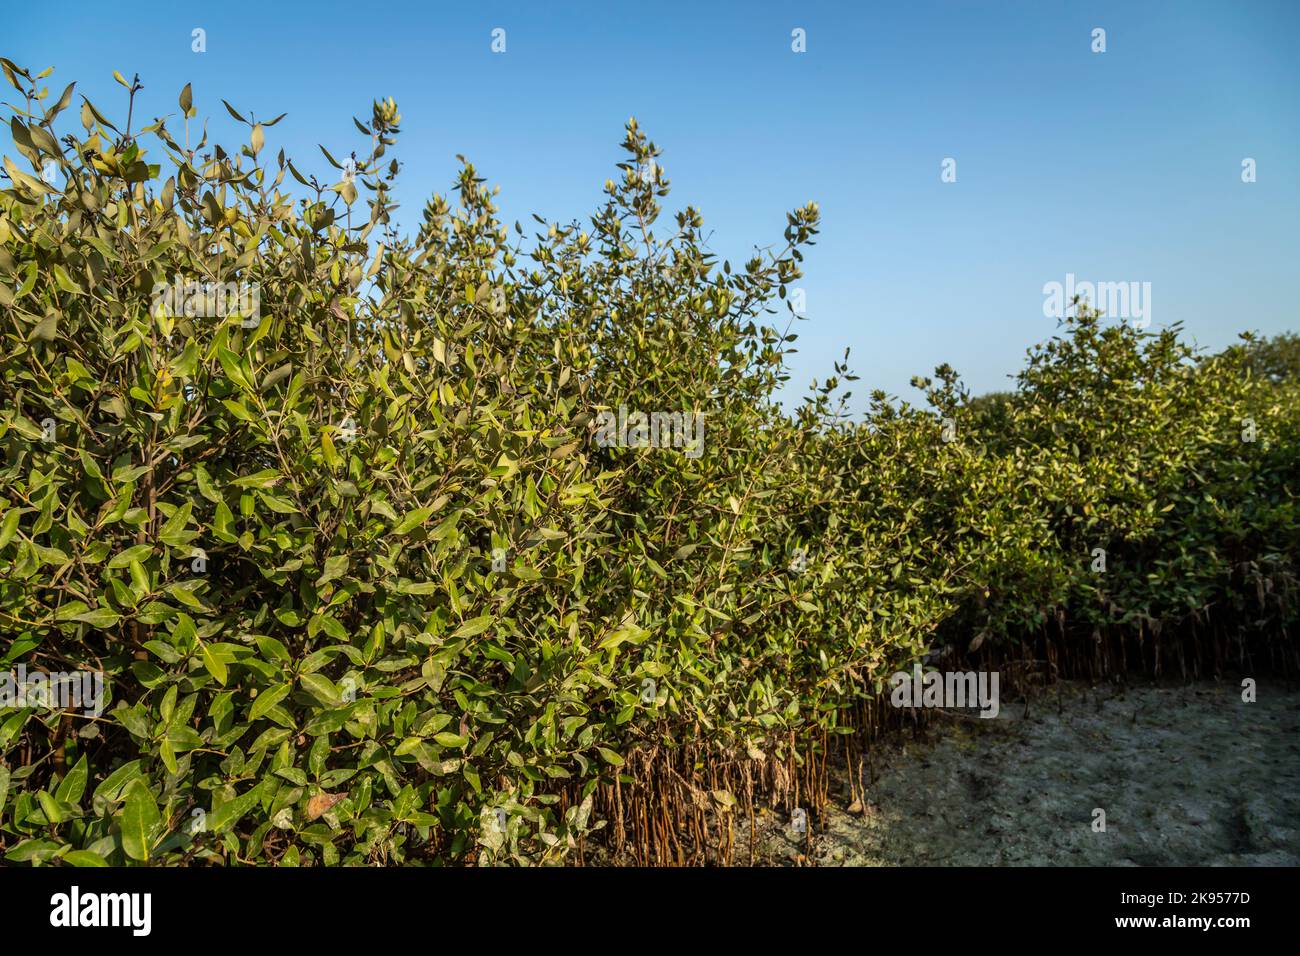 Greenish Mangroves Trees early morning view from Umm Al Quwain beach, UAE Stock Photo